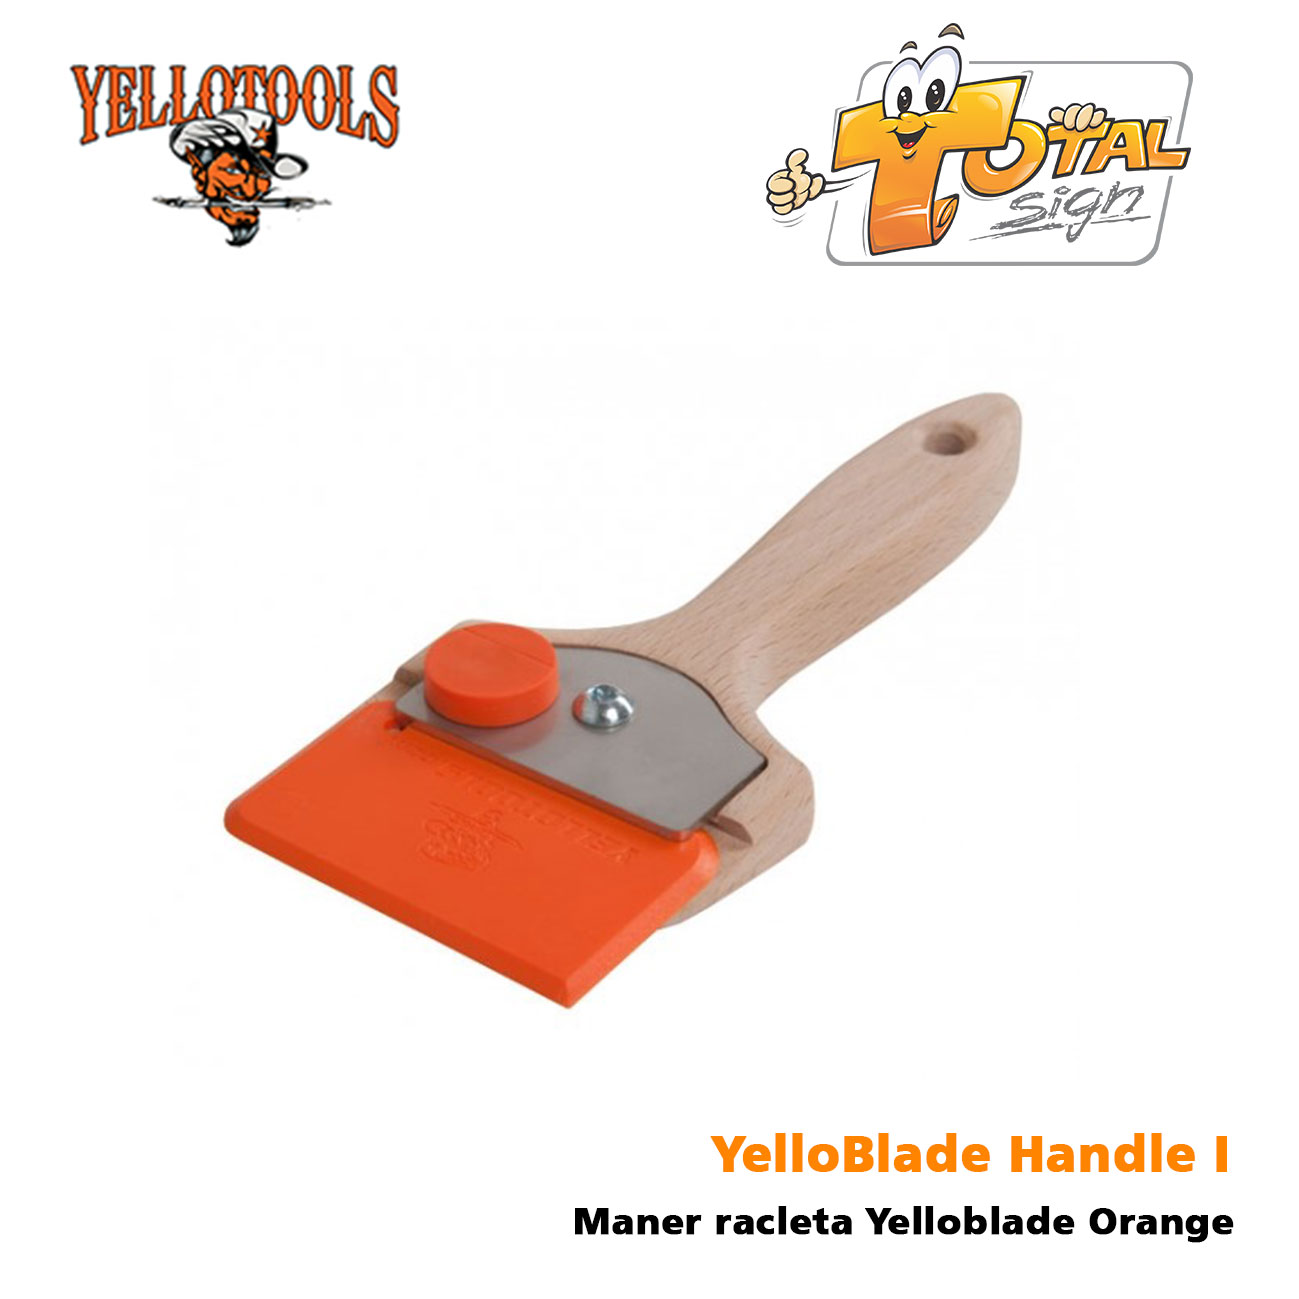 YelloBlade Handle I Maner racleta Yelloblade Orange – Total Sign